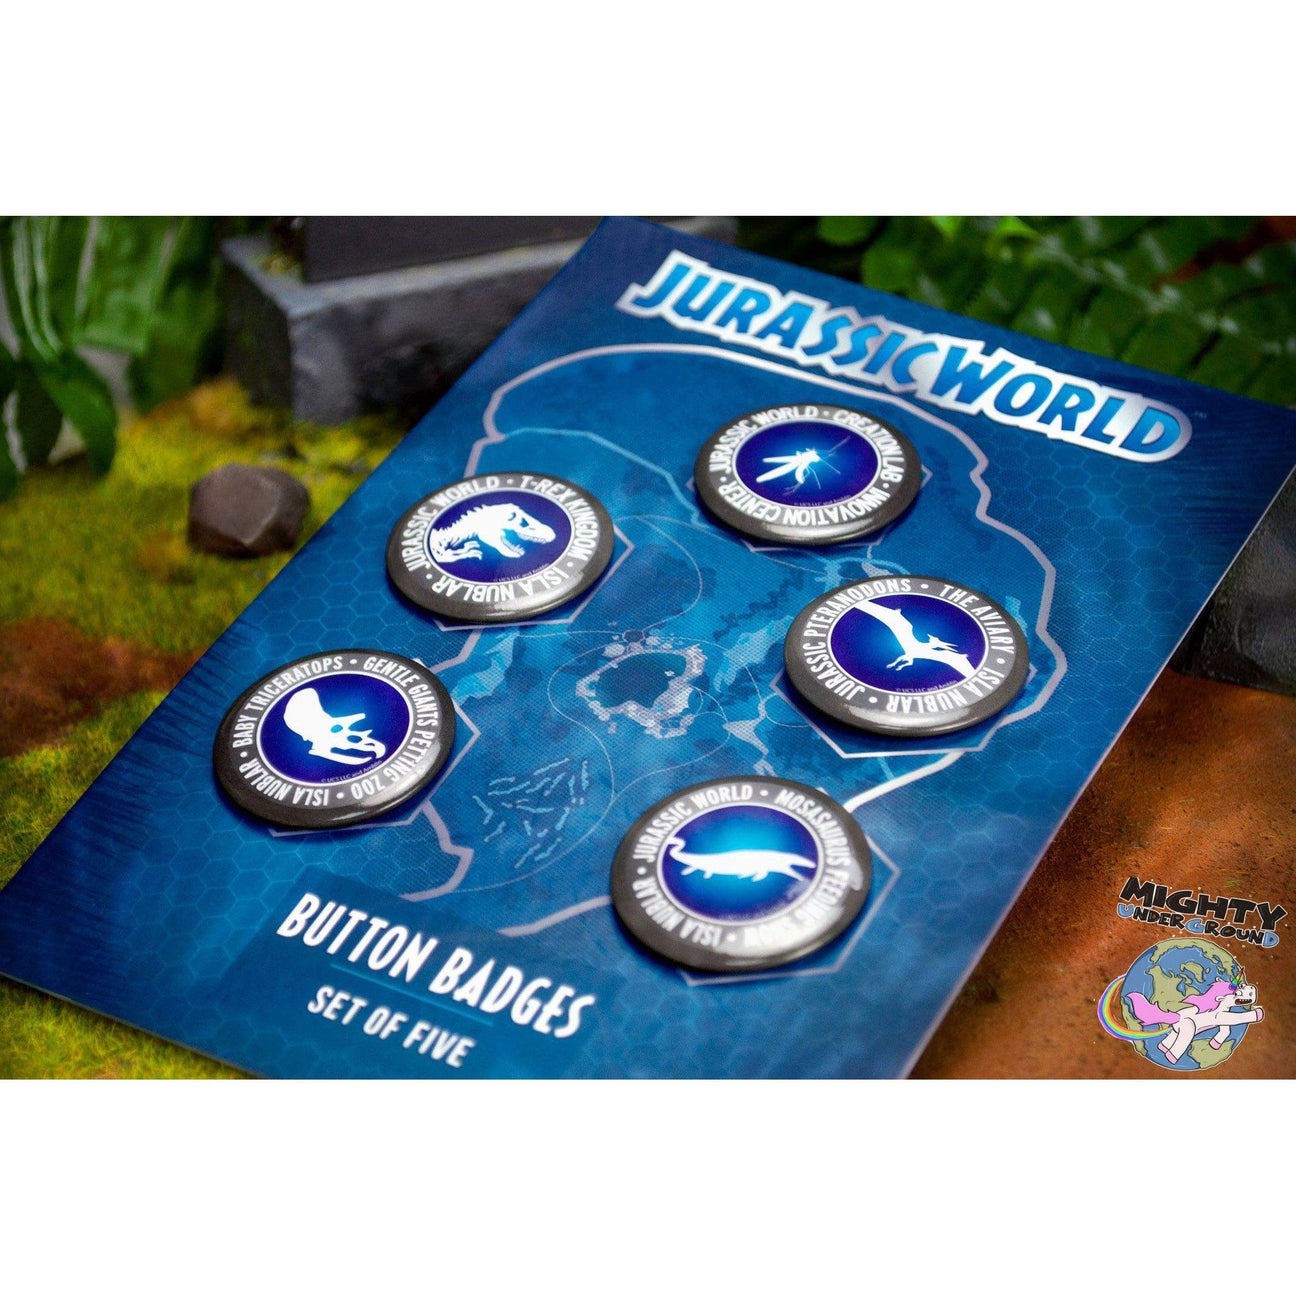 Jurassic World: Indominus Kit-Replik-Dr. Collector-Mighty Underground